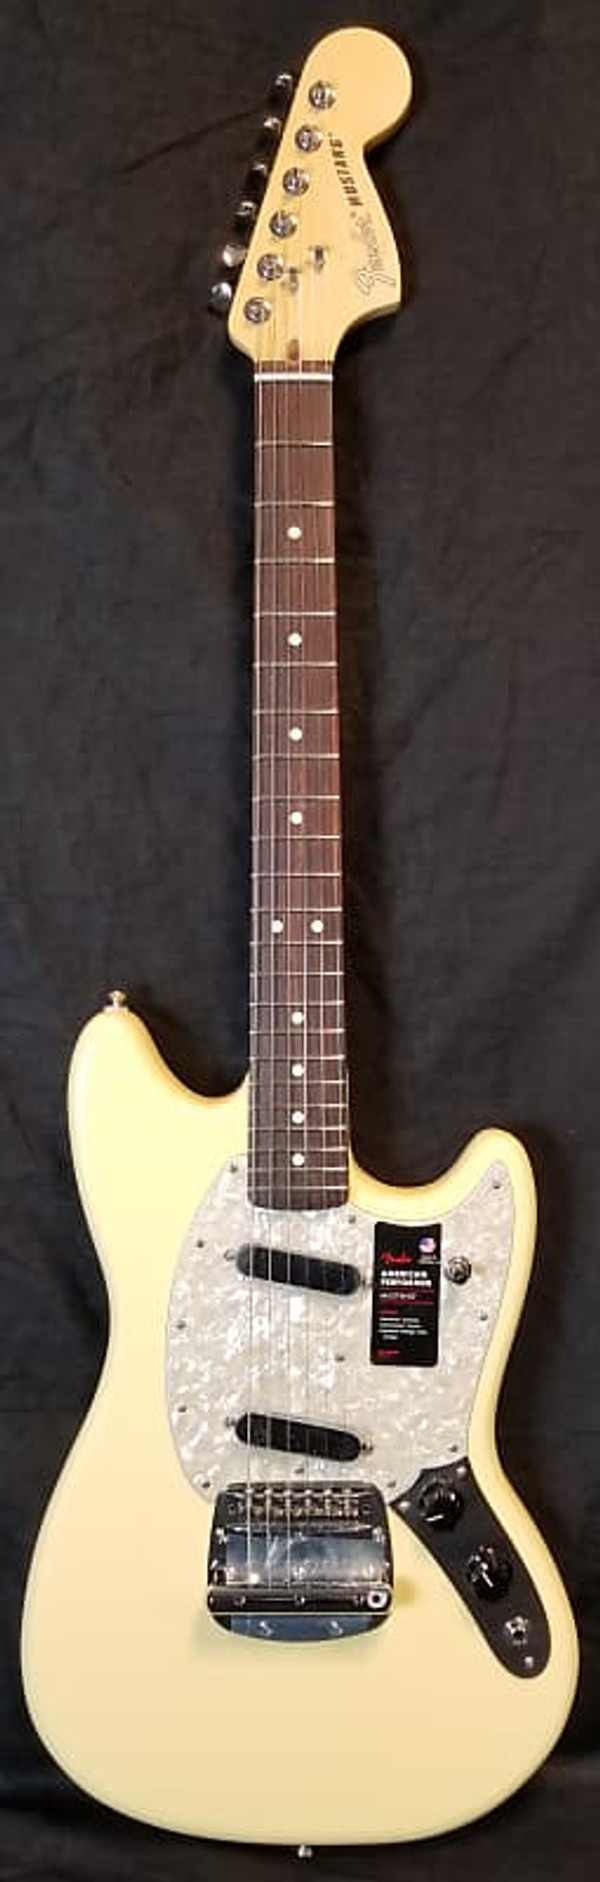 American Performer Mustang Electric Guitar Rosewood Fingerboard, Vintage White W/ Deluxe Gig Bag